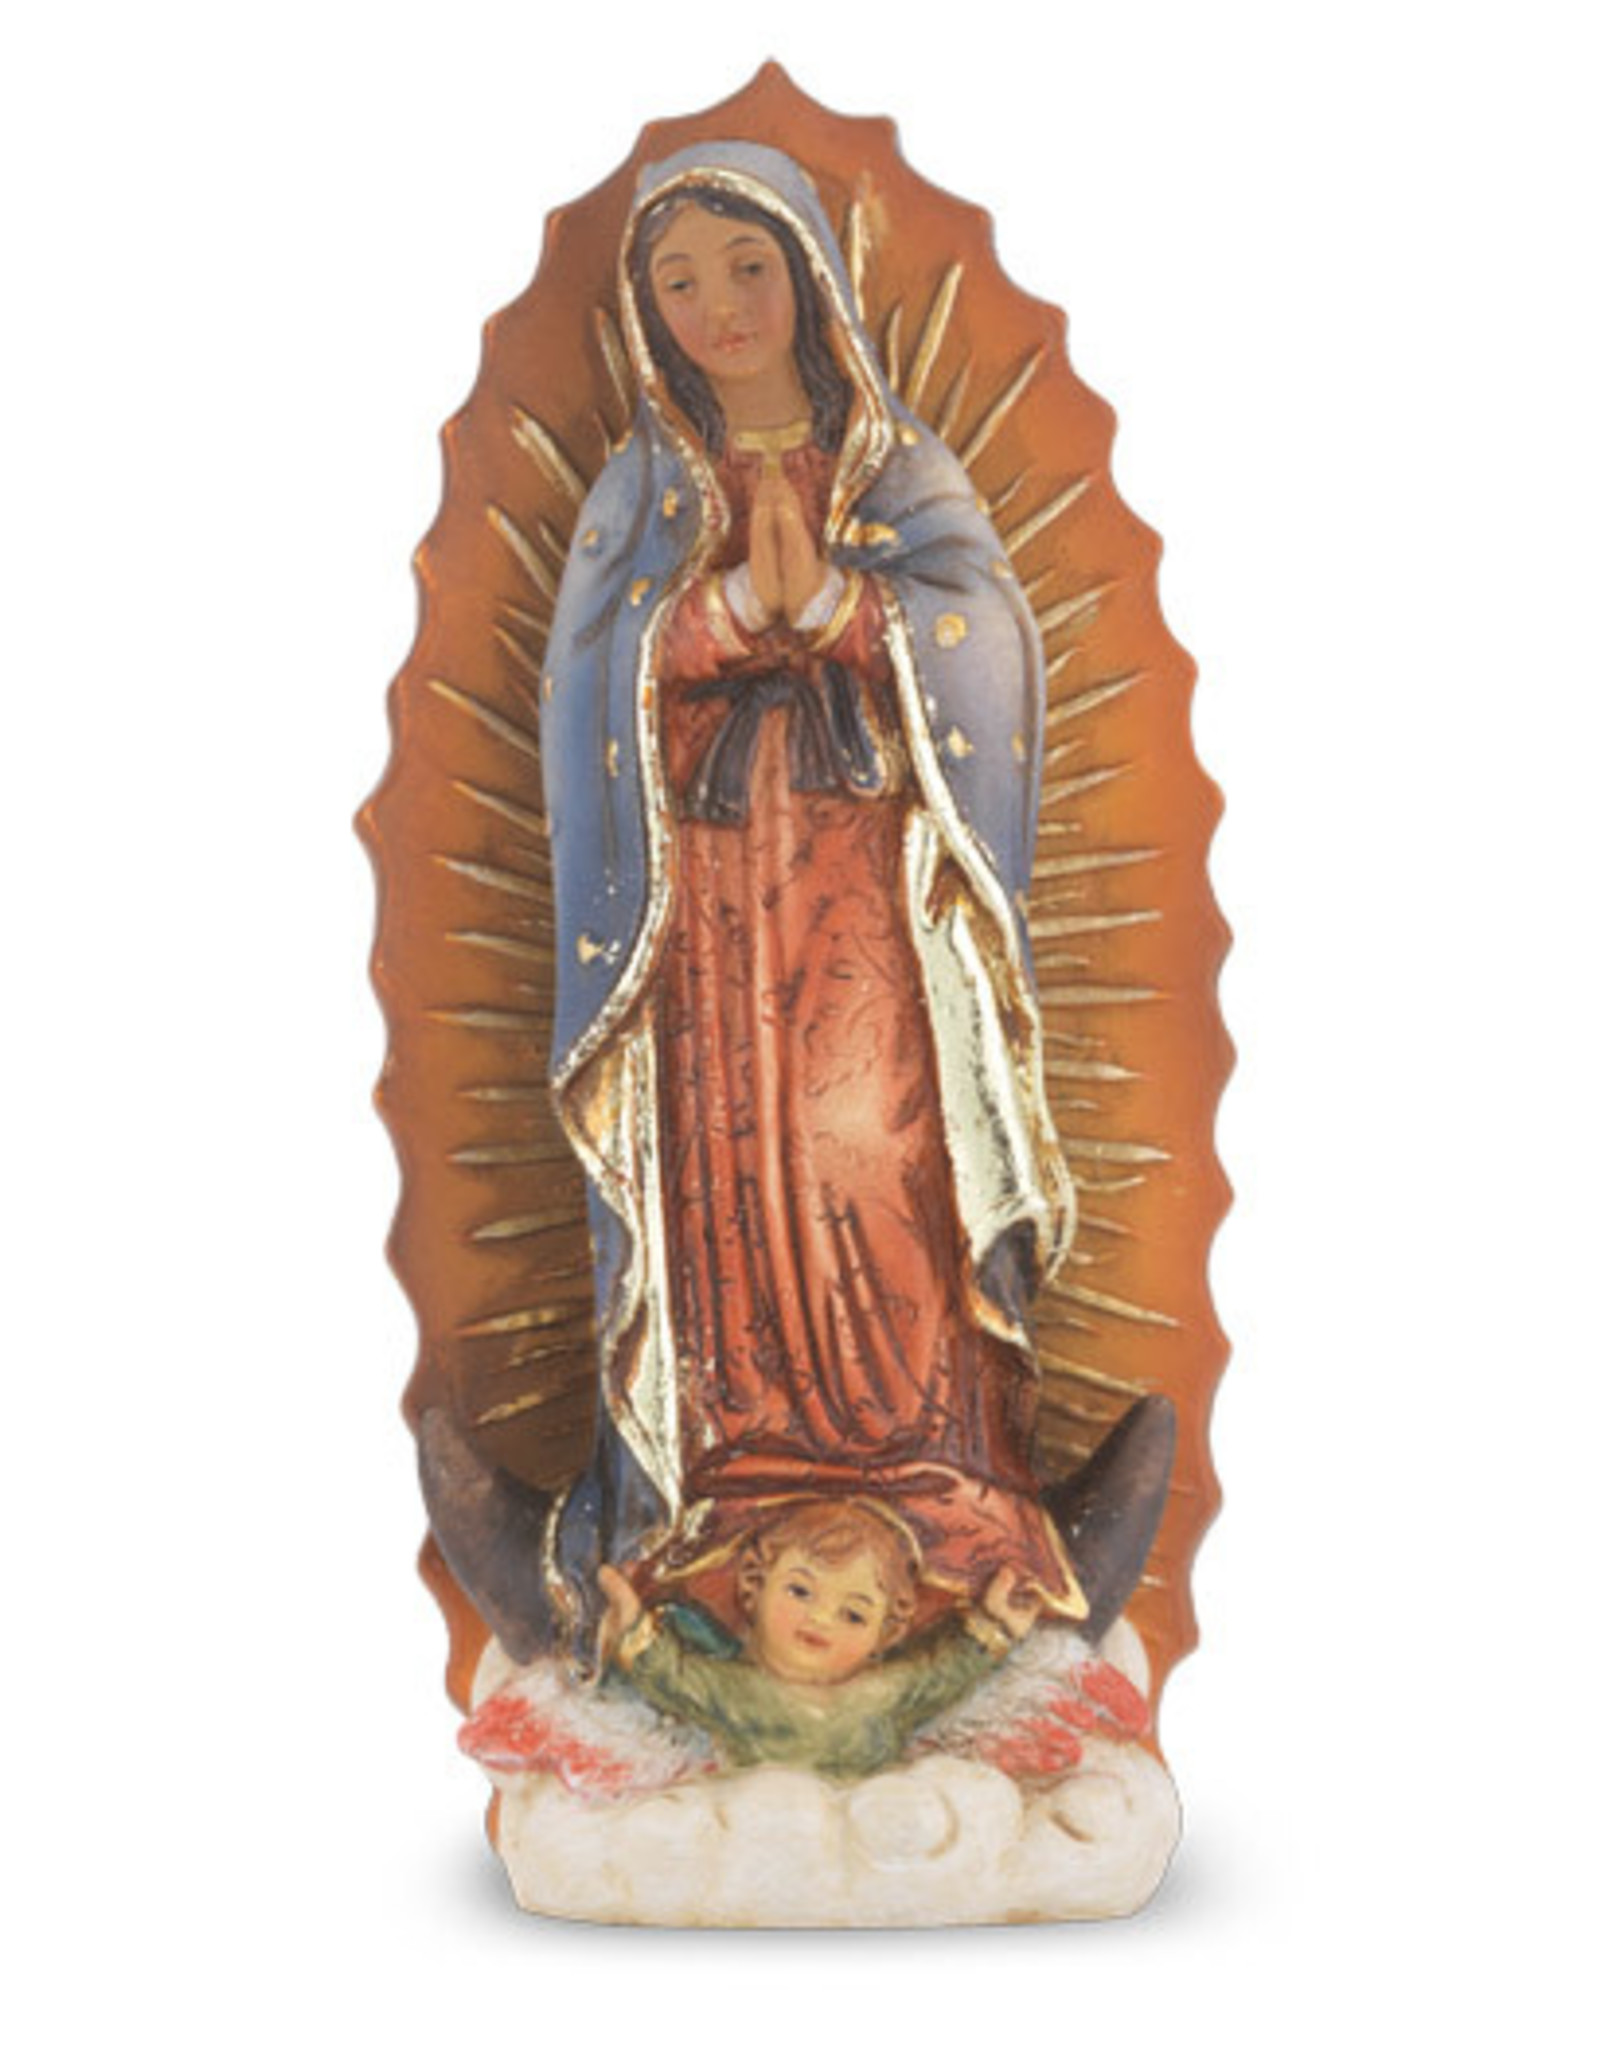 Hirten Patron Saint Statue - Our Lady of Guadalupe